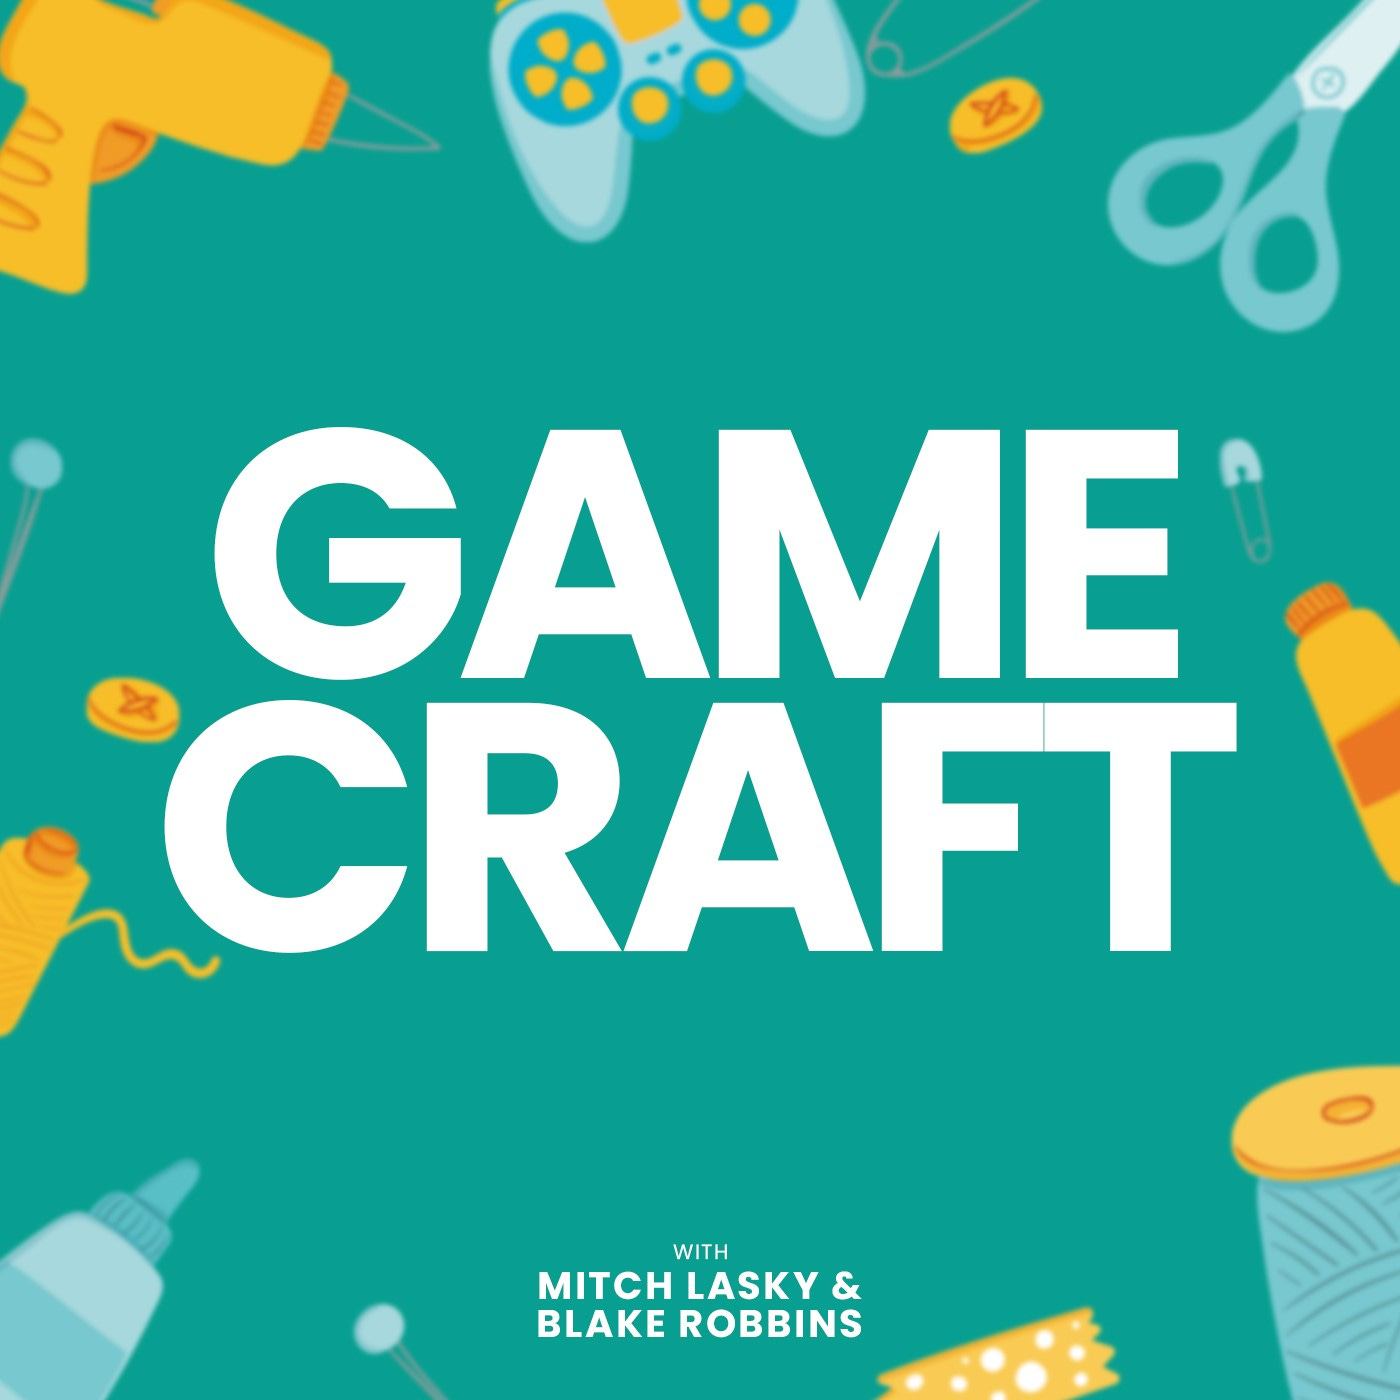 Gamecraft Podcast | Mitch Lasky & Blake Robbins